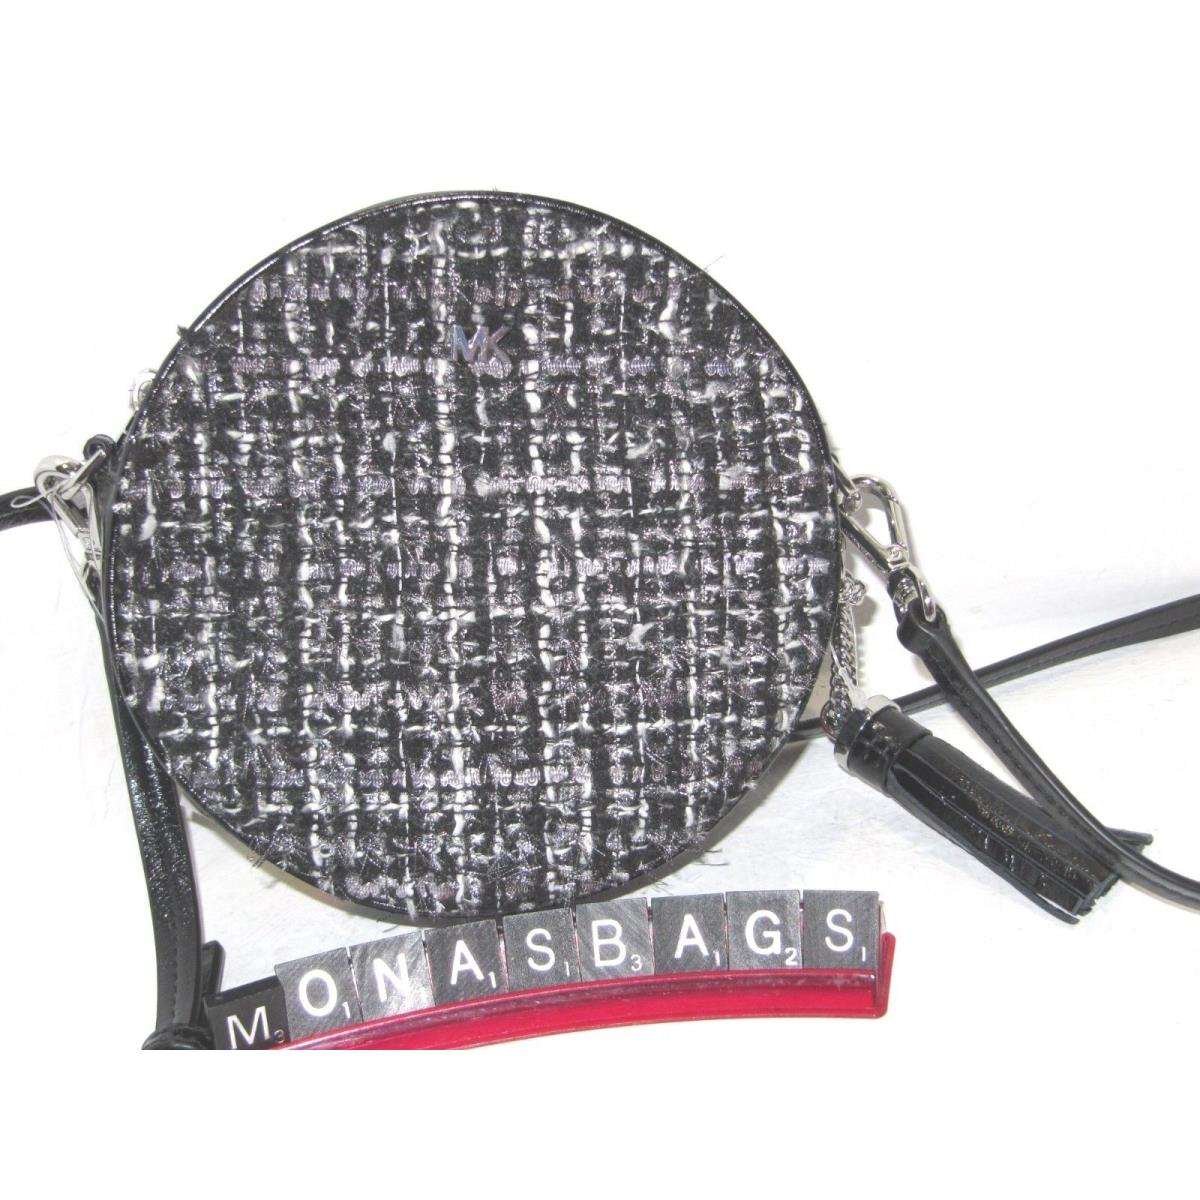 Michael Kors Leather Canteen Black White Tweed Crossbody Bag Tassel